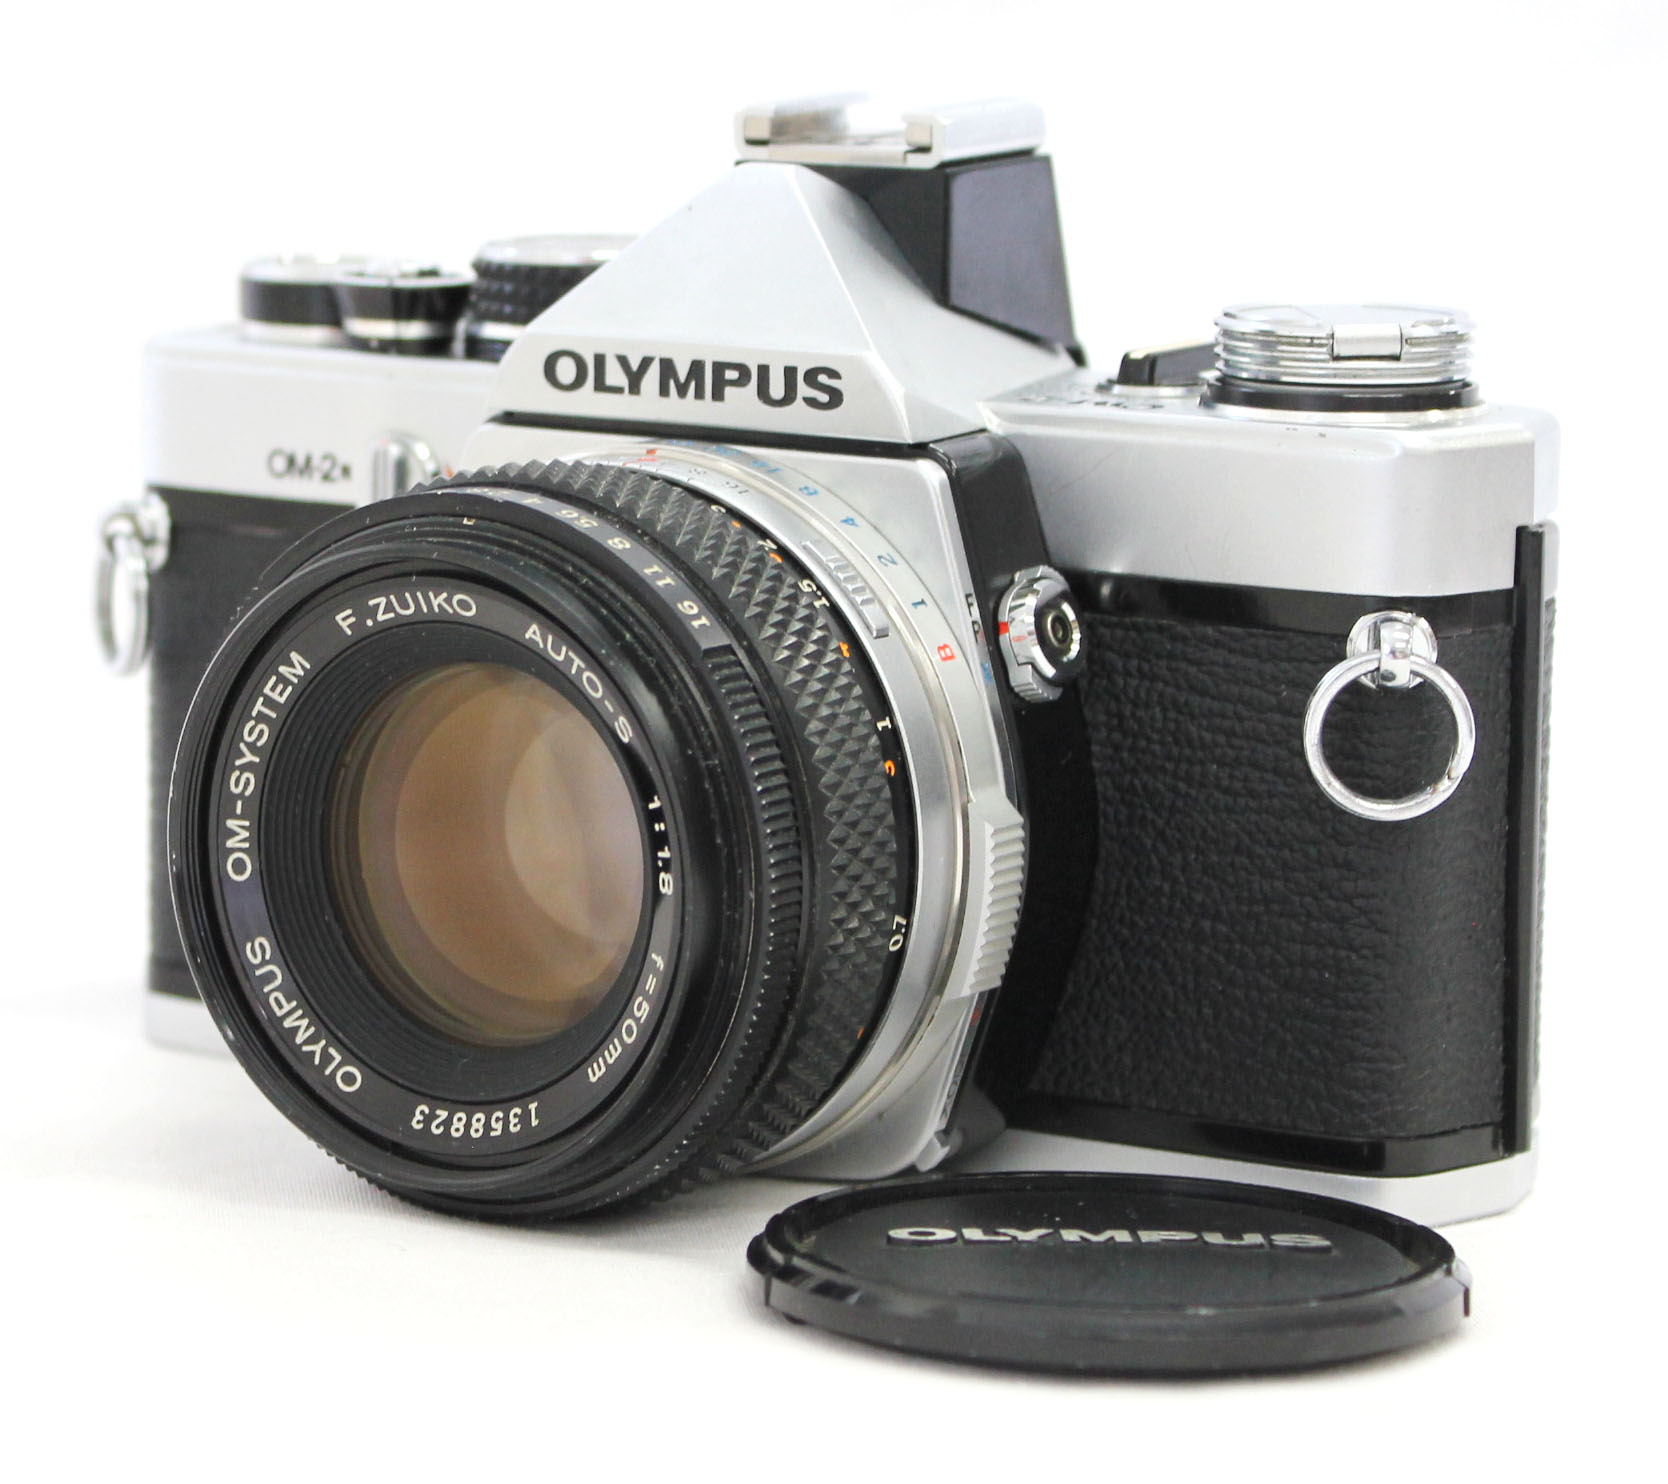 Olympus OM-2N 35mm SLR Film Camera with OM-System F.Zuiko Auto-S 50mm F/1.8 Lens from Japan